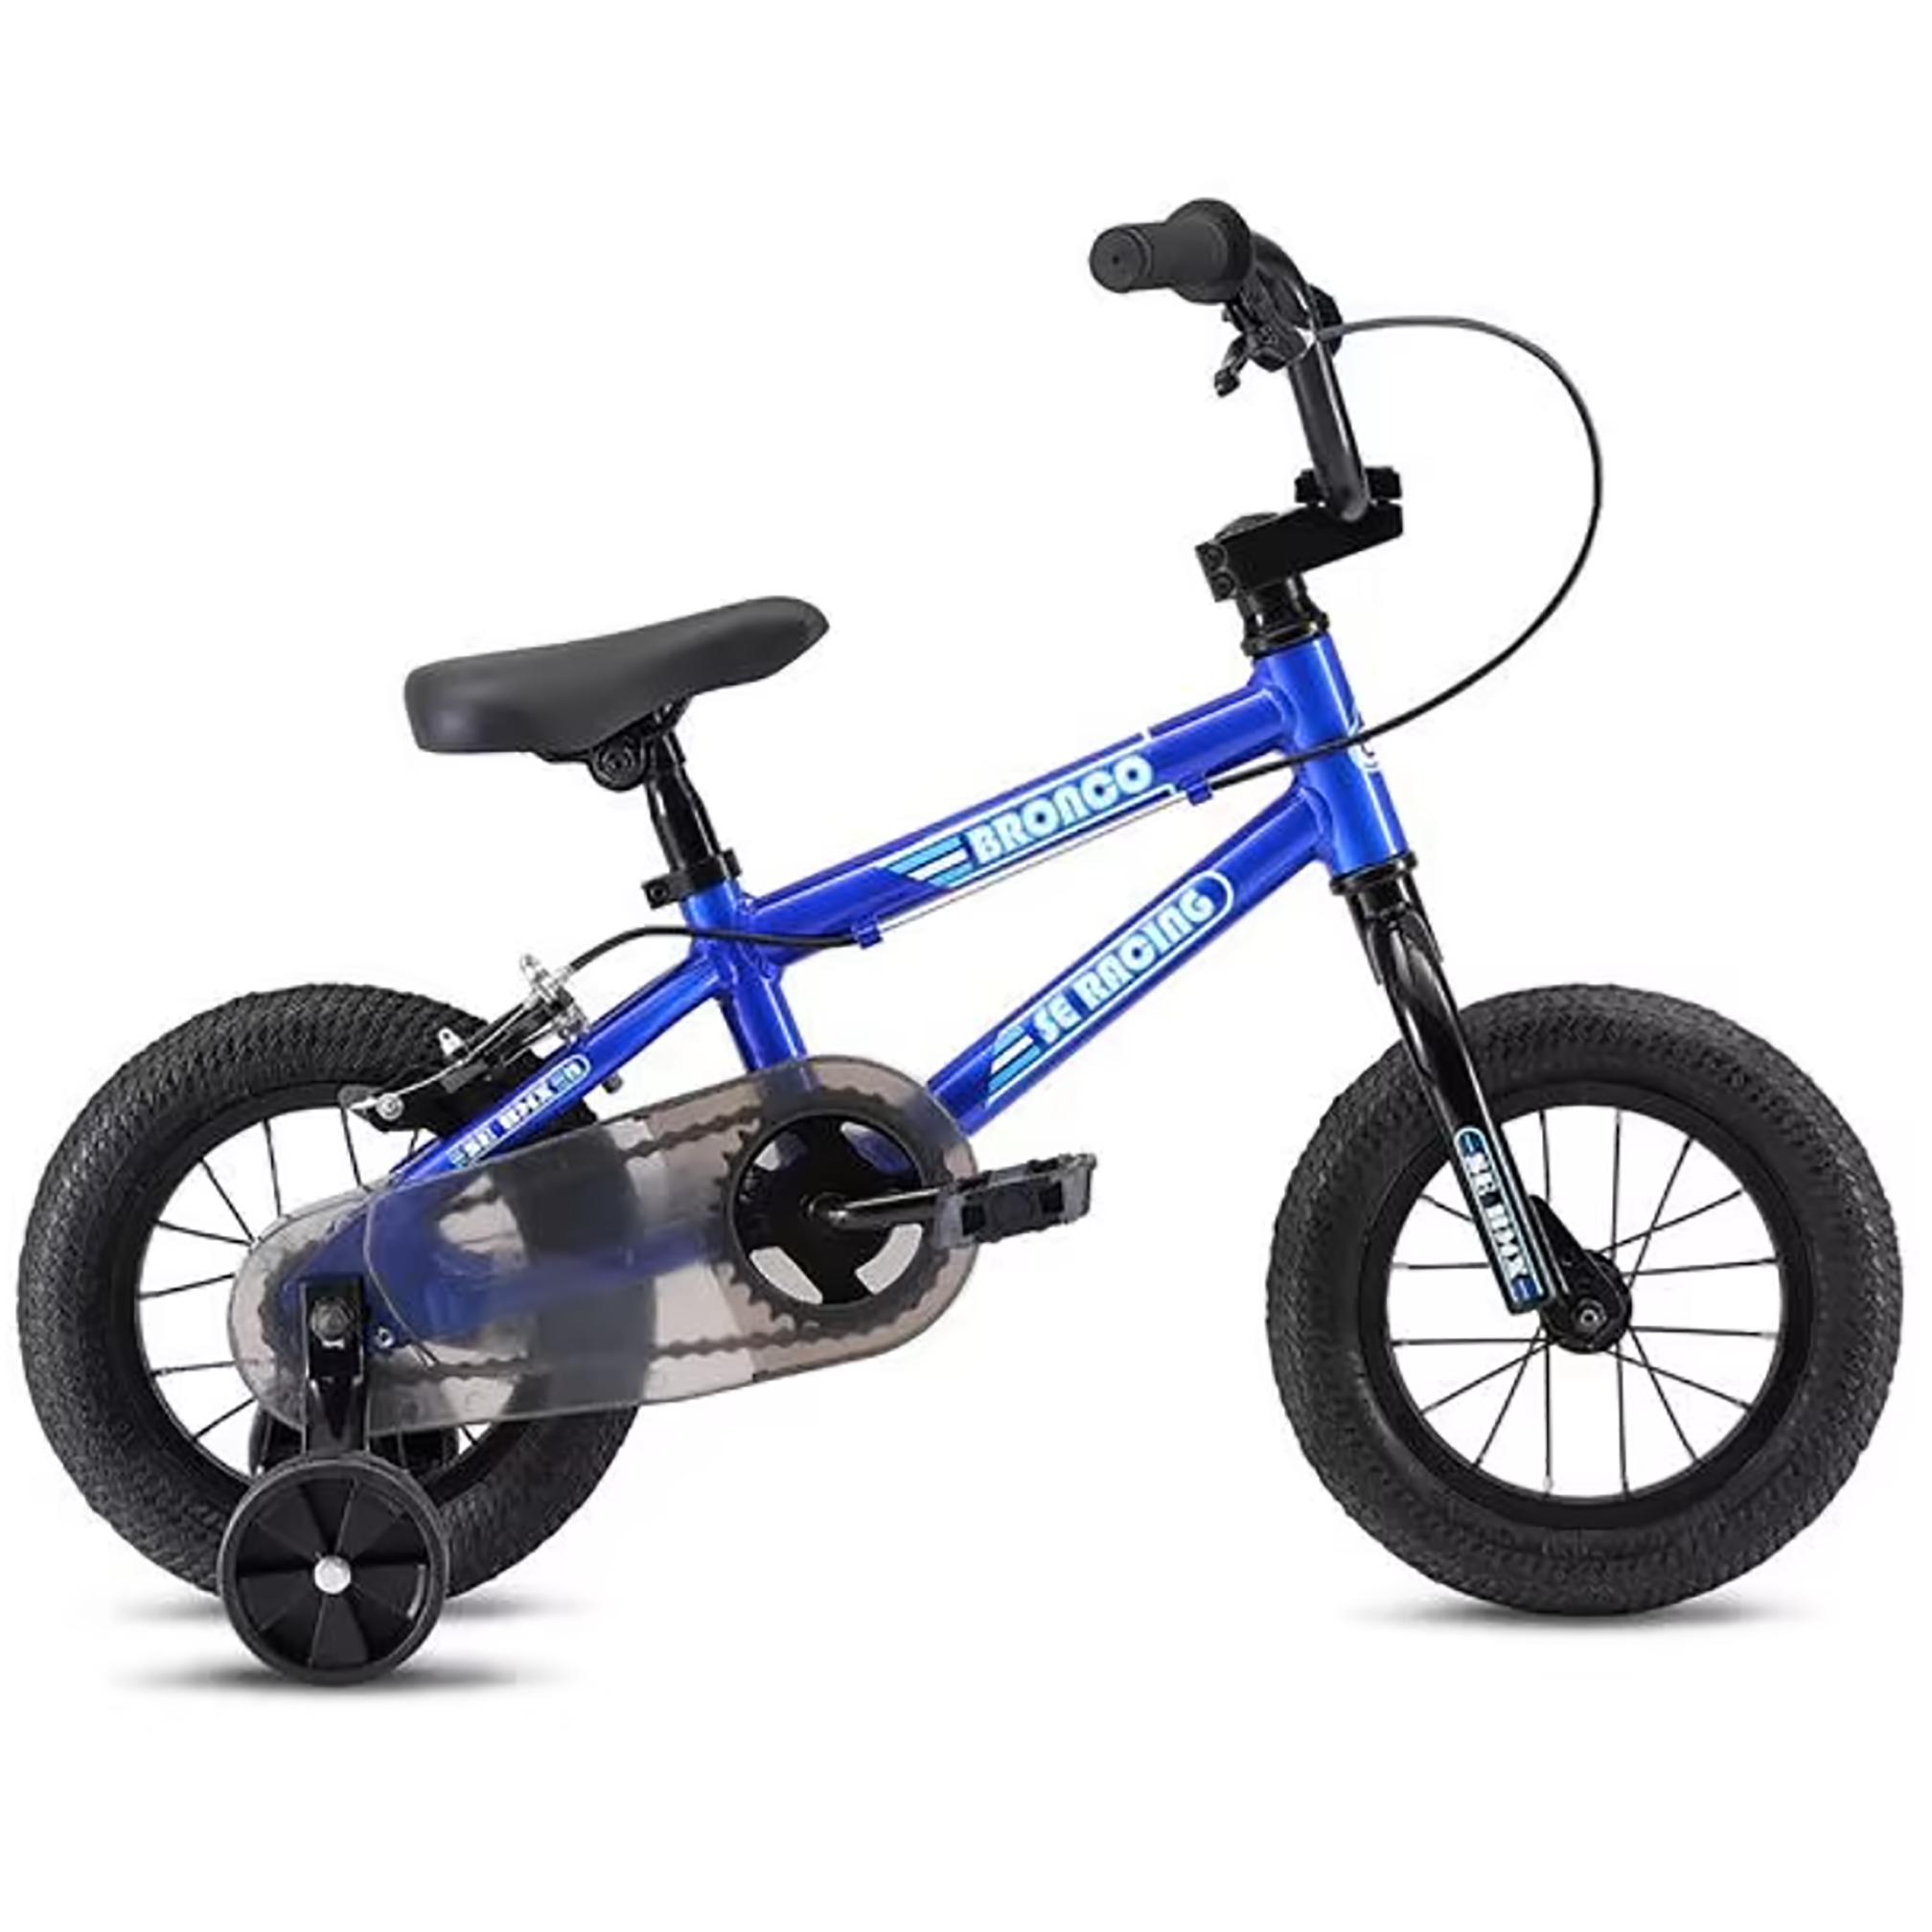 Prometheus 12” Kids Bicycle Bike with Training Wheels Green New 